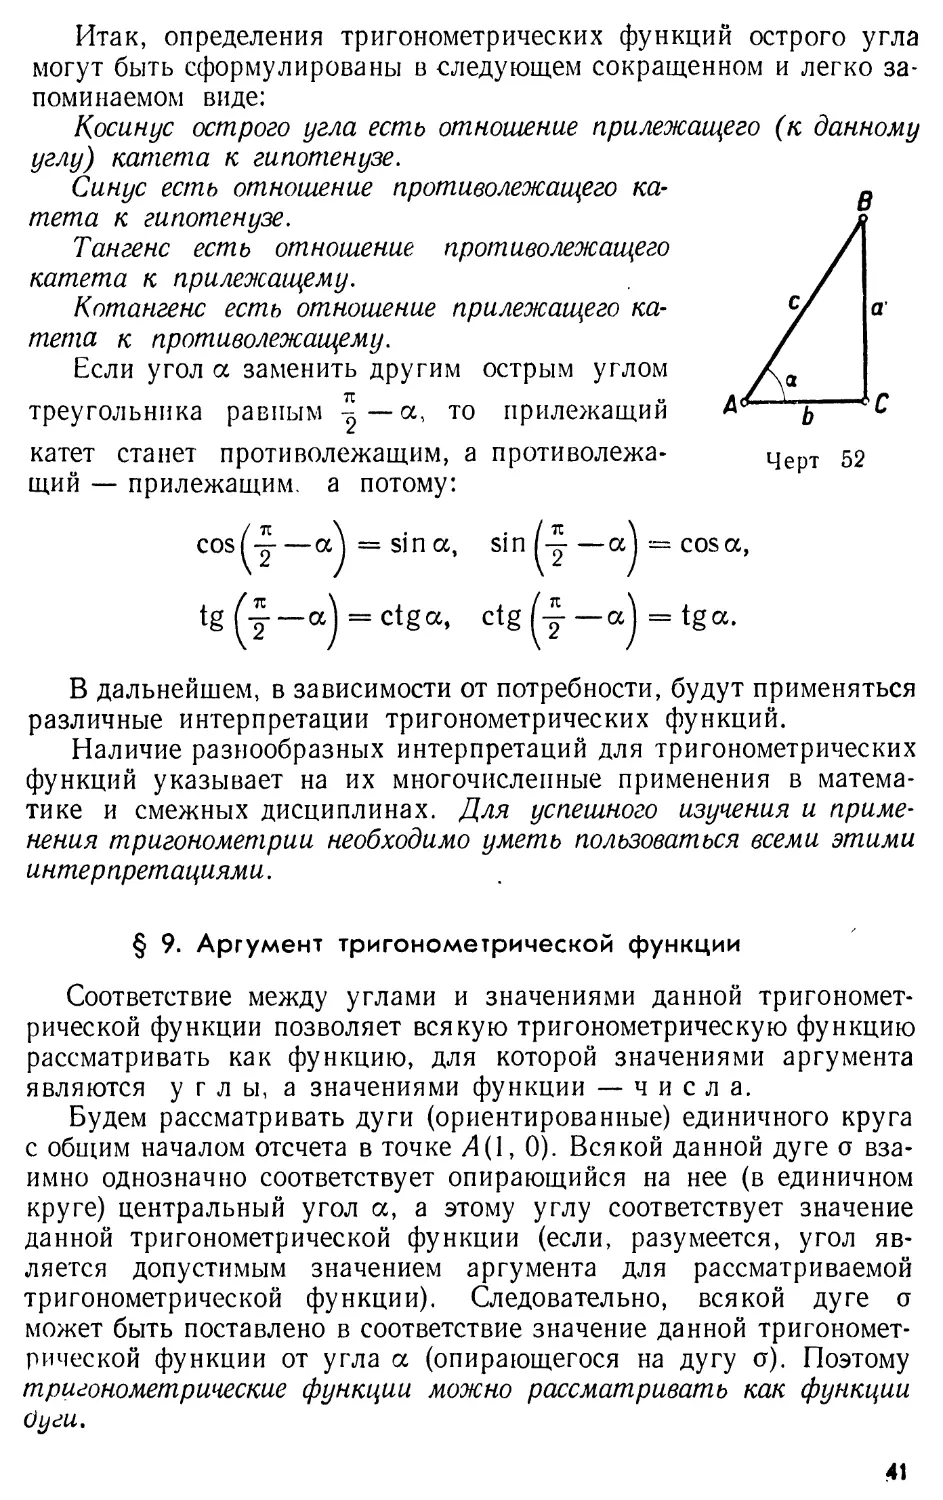 § 9. Аргумент тригонометрической функции